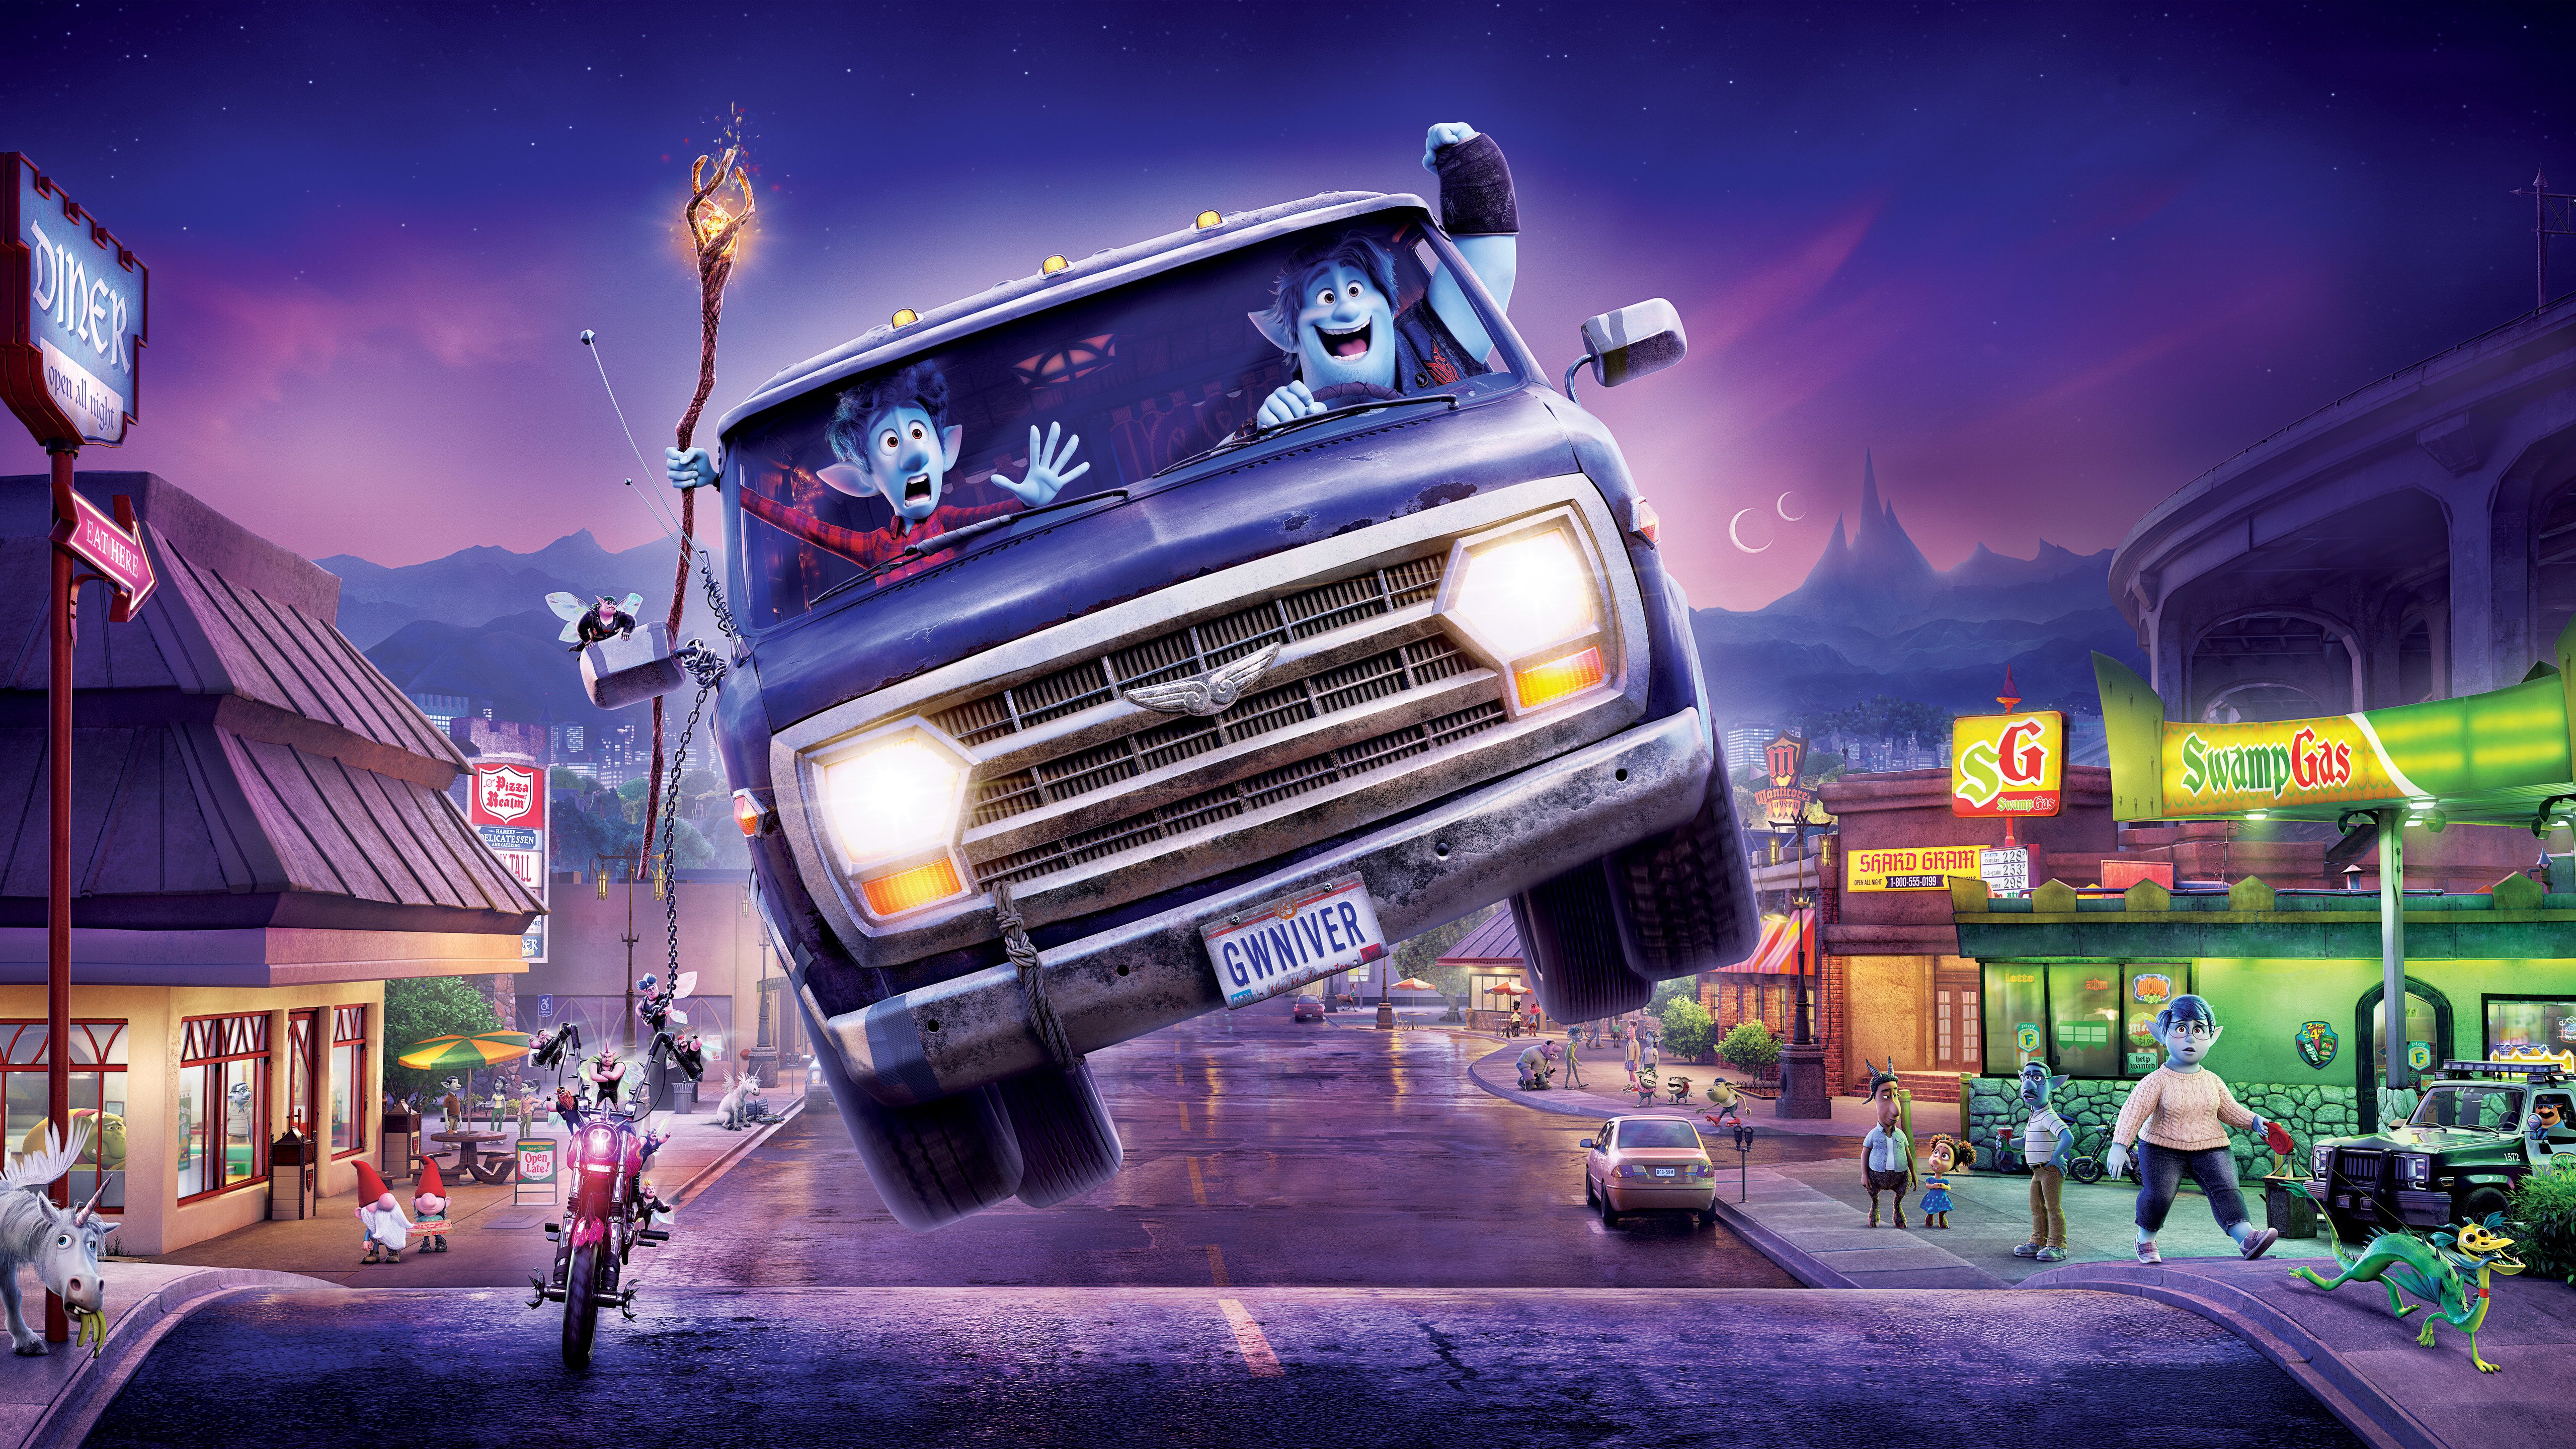 Wallpaper Scene from Onward Pixar